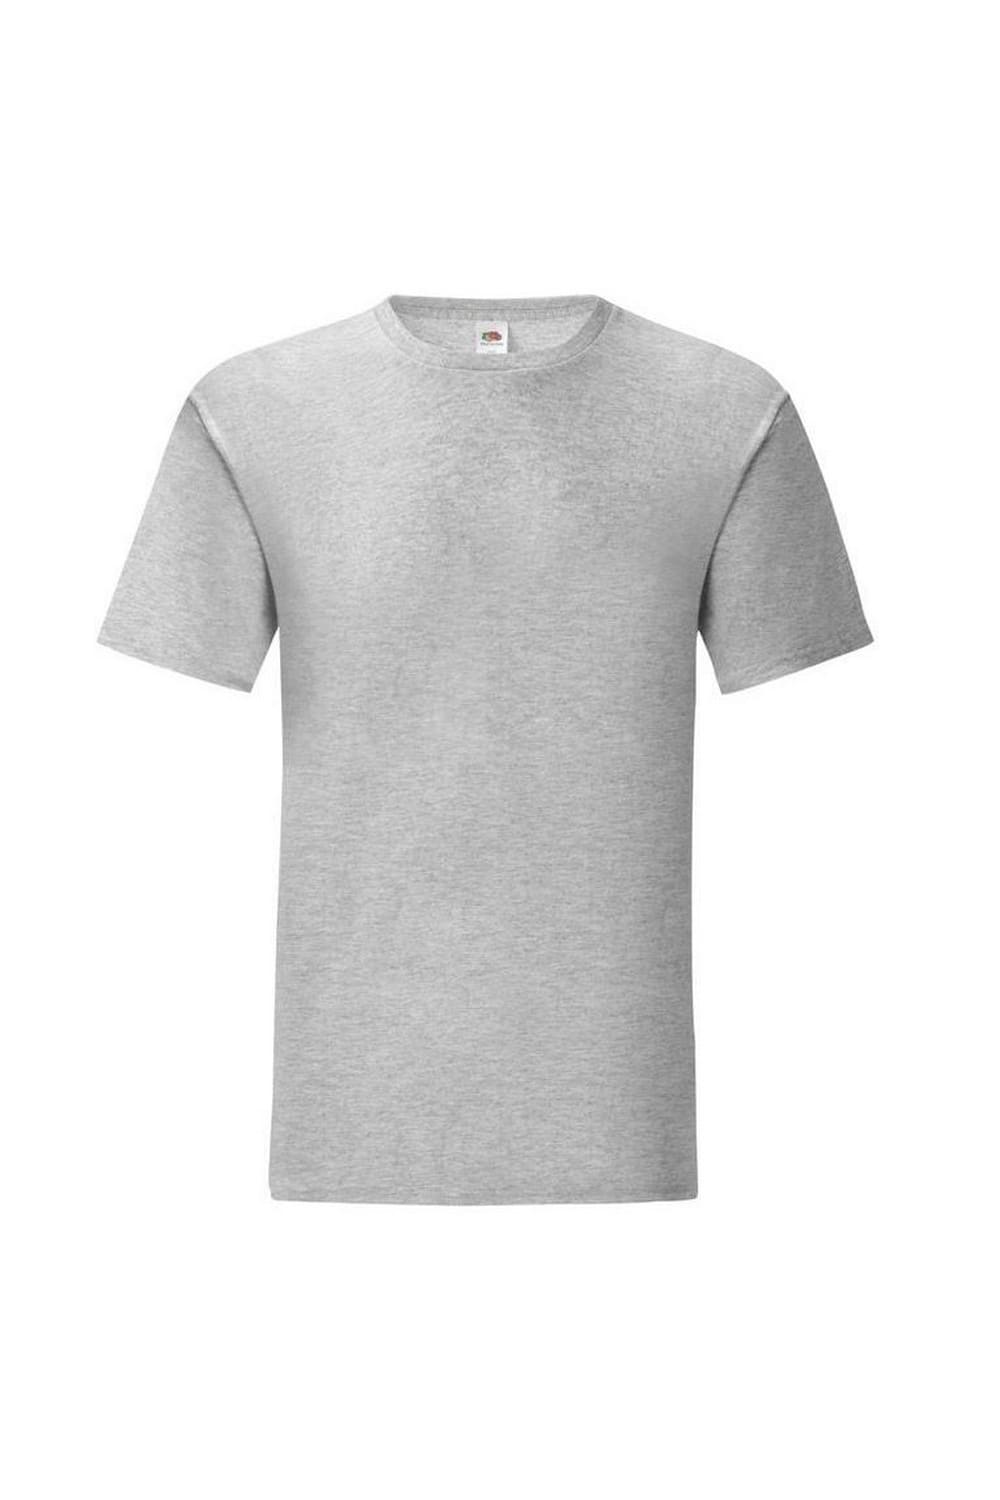 Mens Iconic 150 T-Shirt - Heather Grey